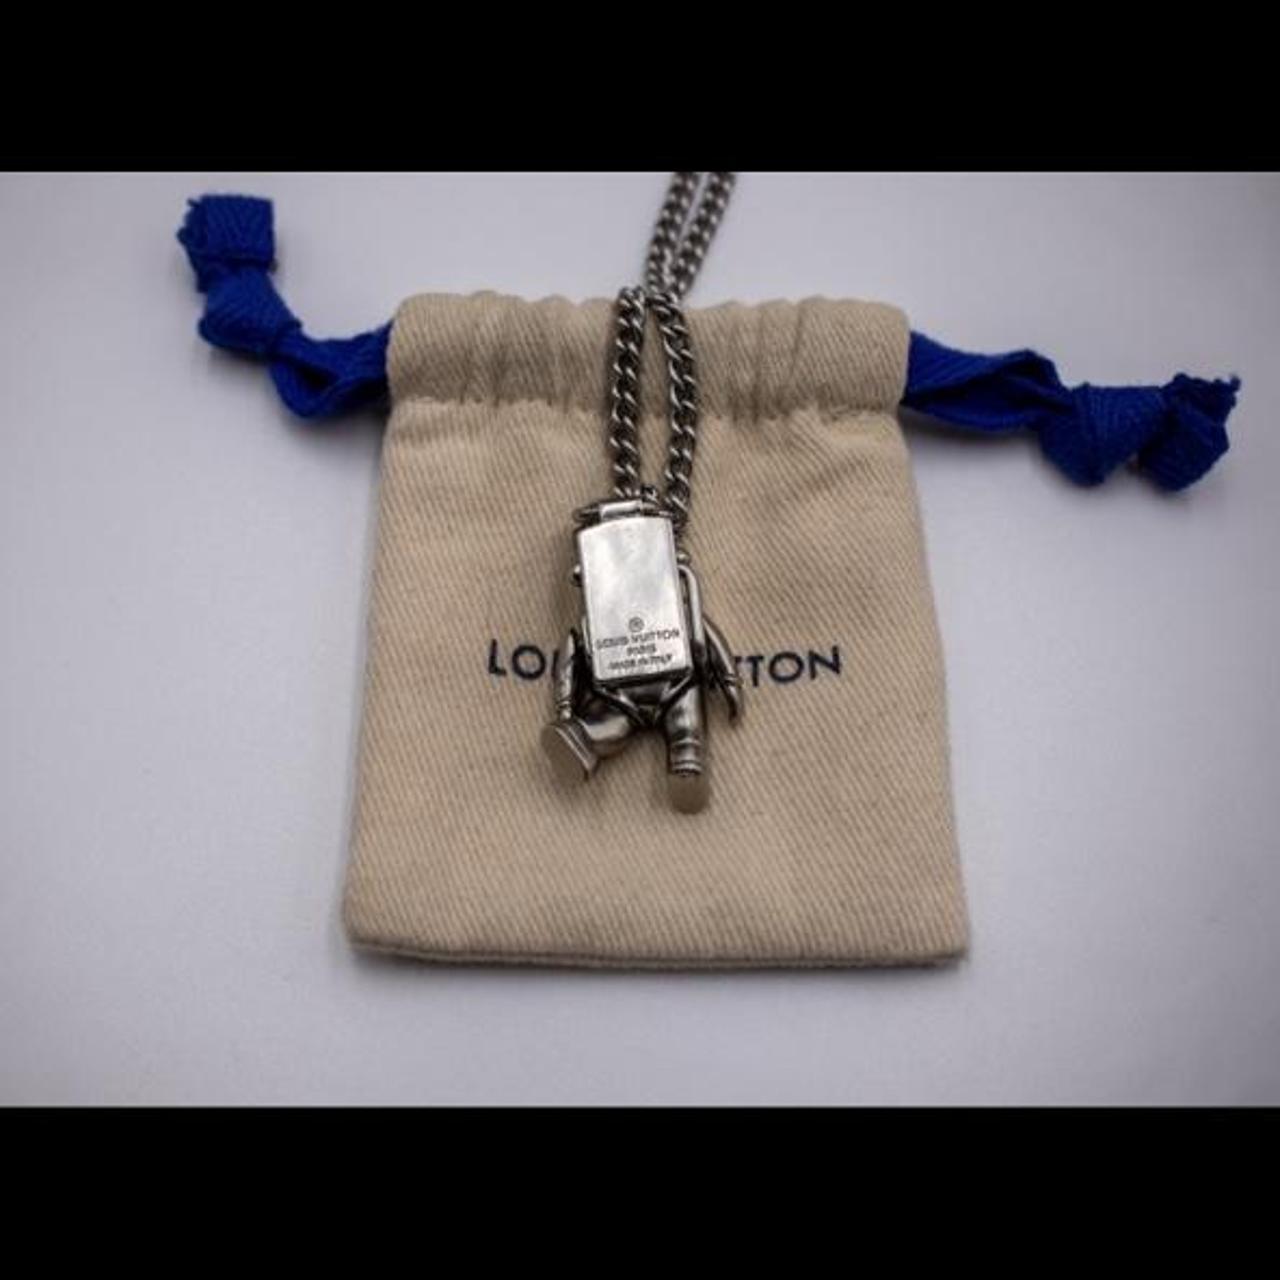 Louis Vuitton lockit Bracelet Sterling Silver and - Depop